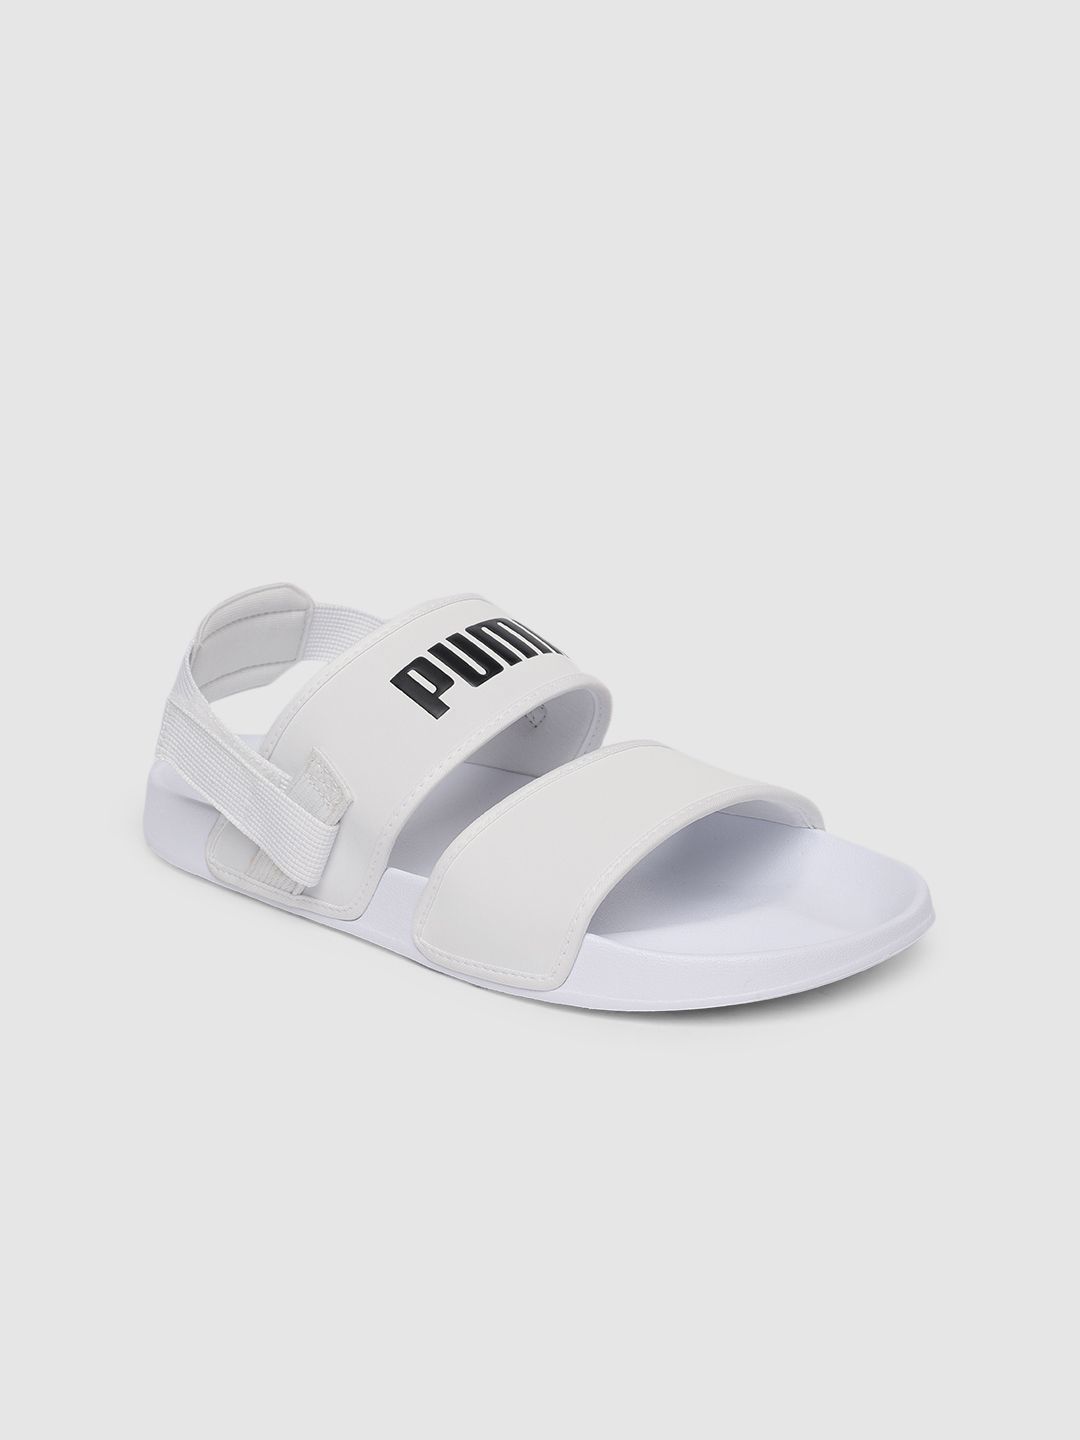 Puma Women White Printed Leadcat Ylm Lite Sports Sandals Price in India